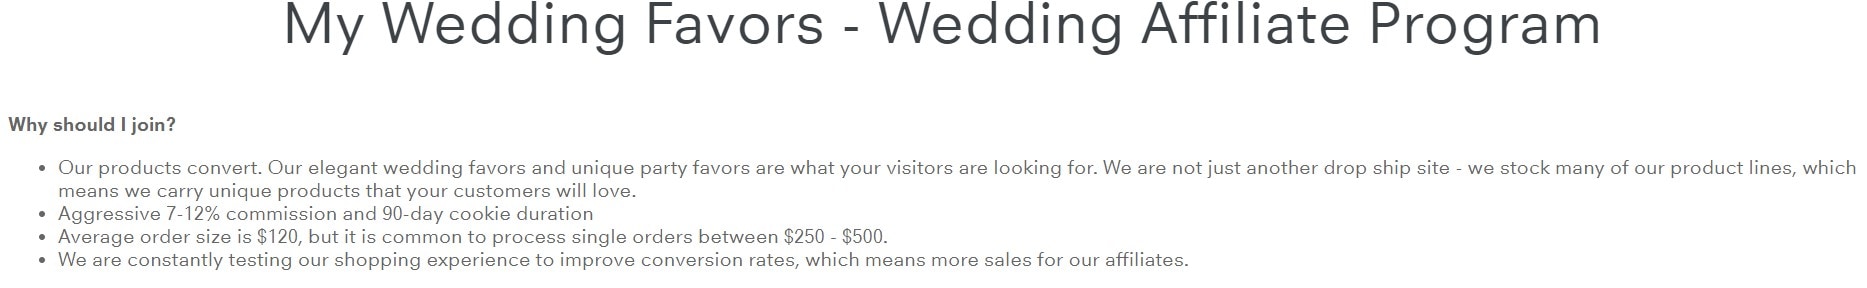 My Wedding Favors Affiliate Programs